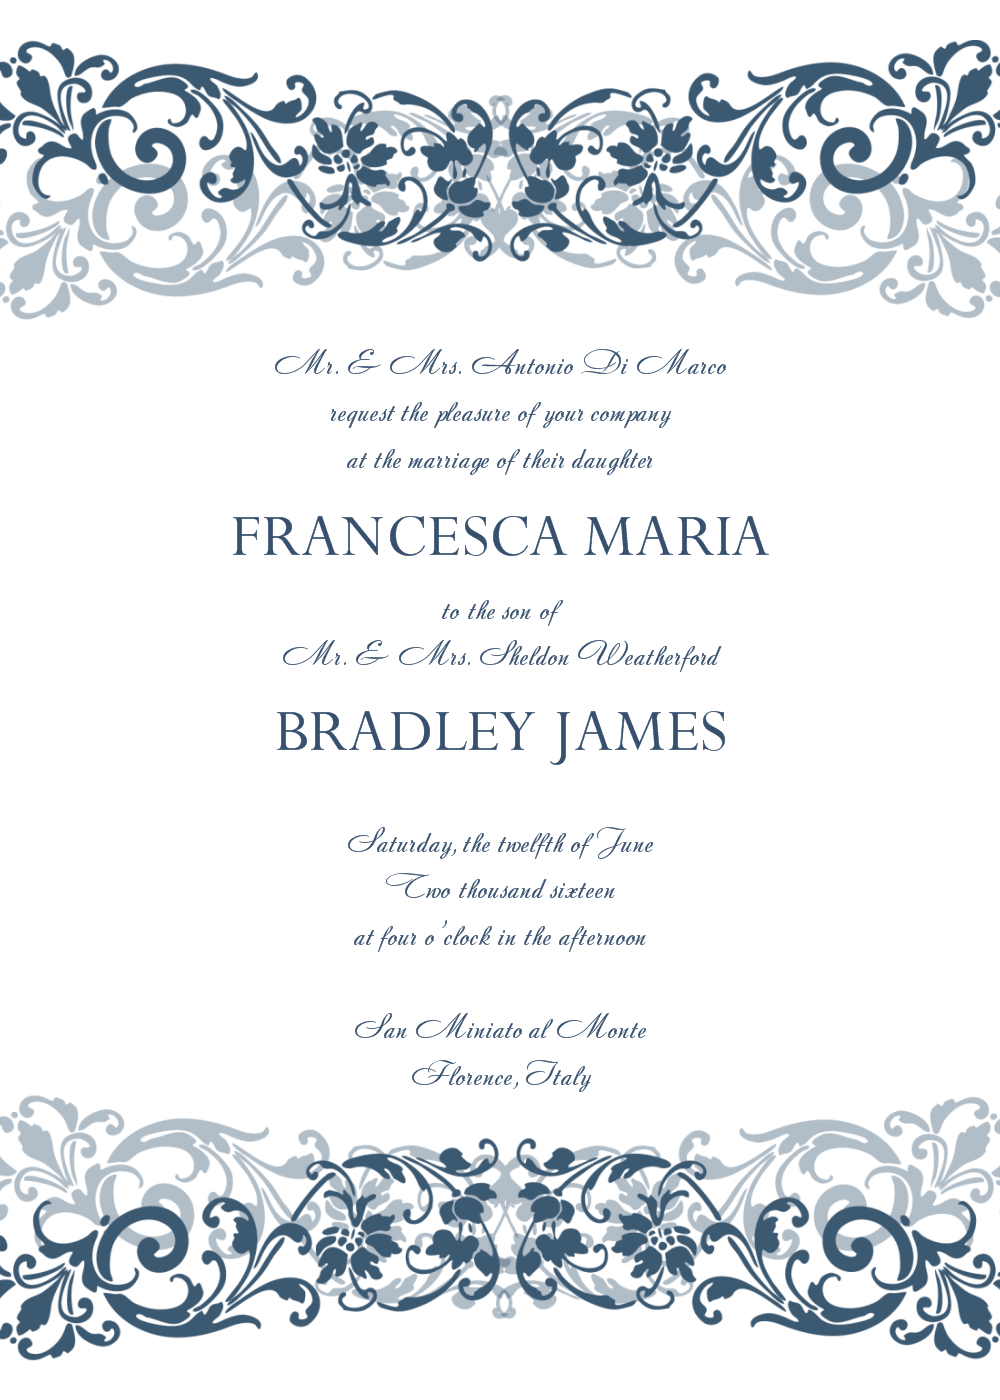 Wedding Invitation Template Free 30 Free Wedding Invitations Templates 21st Bridal World